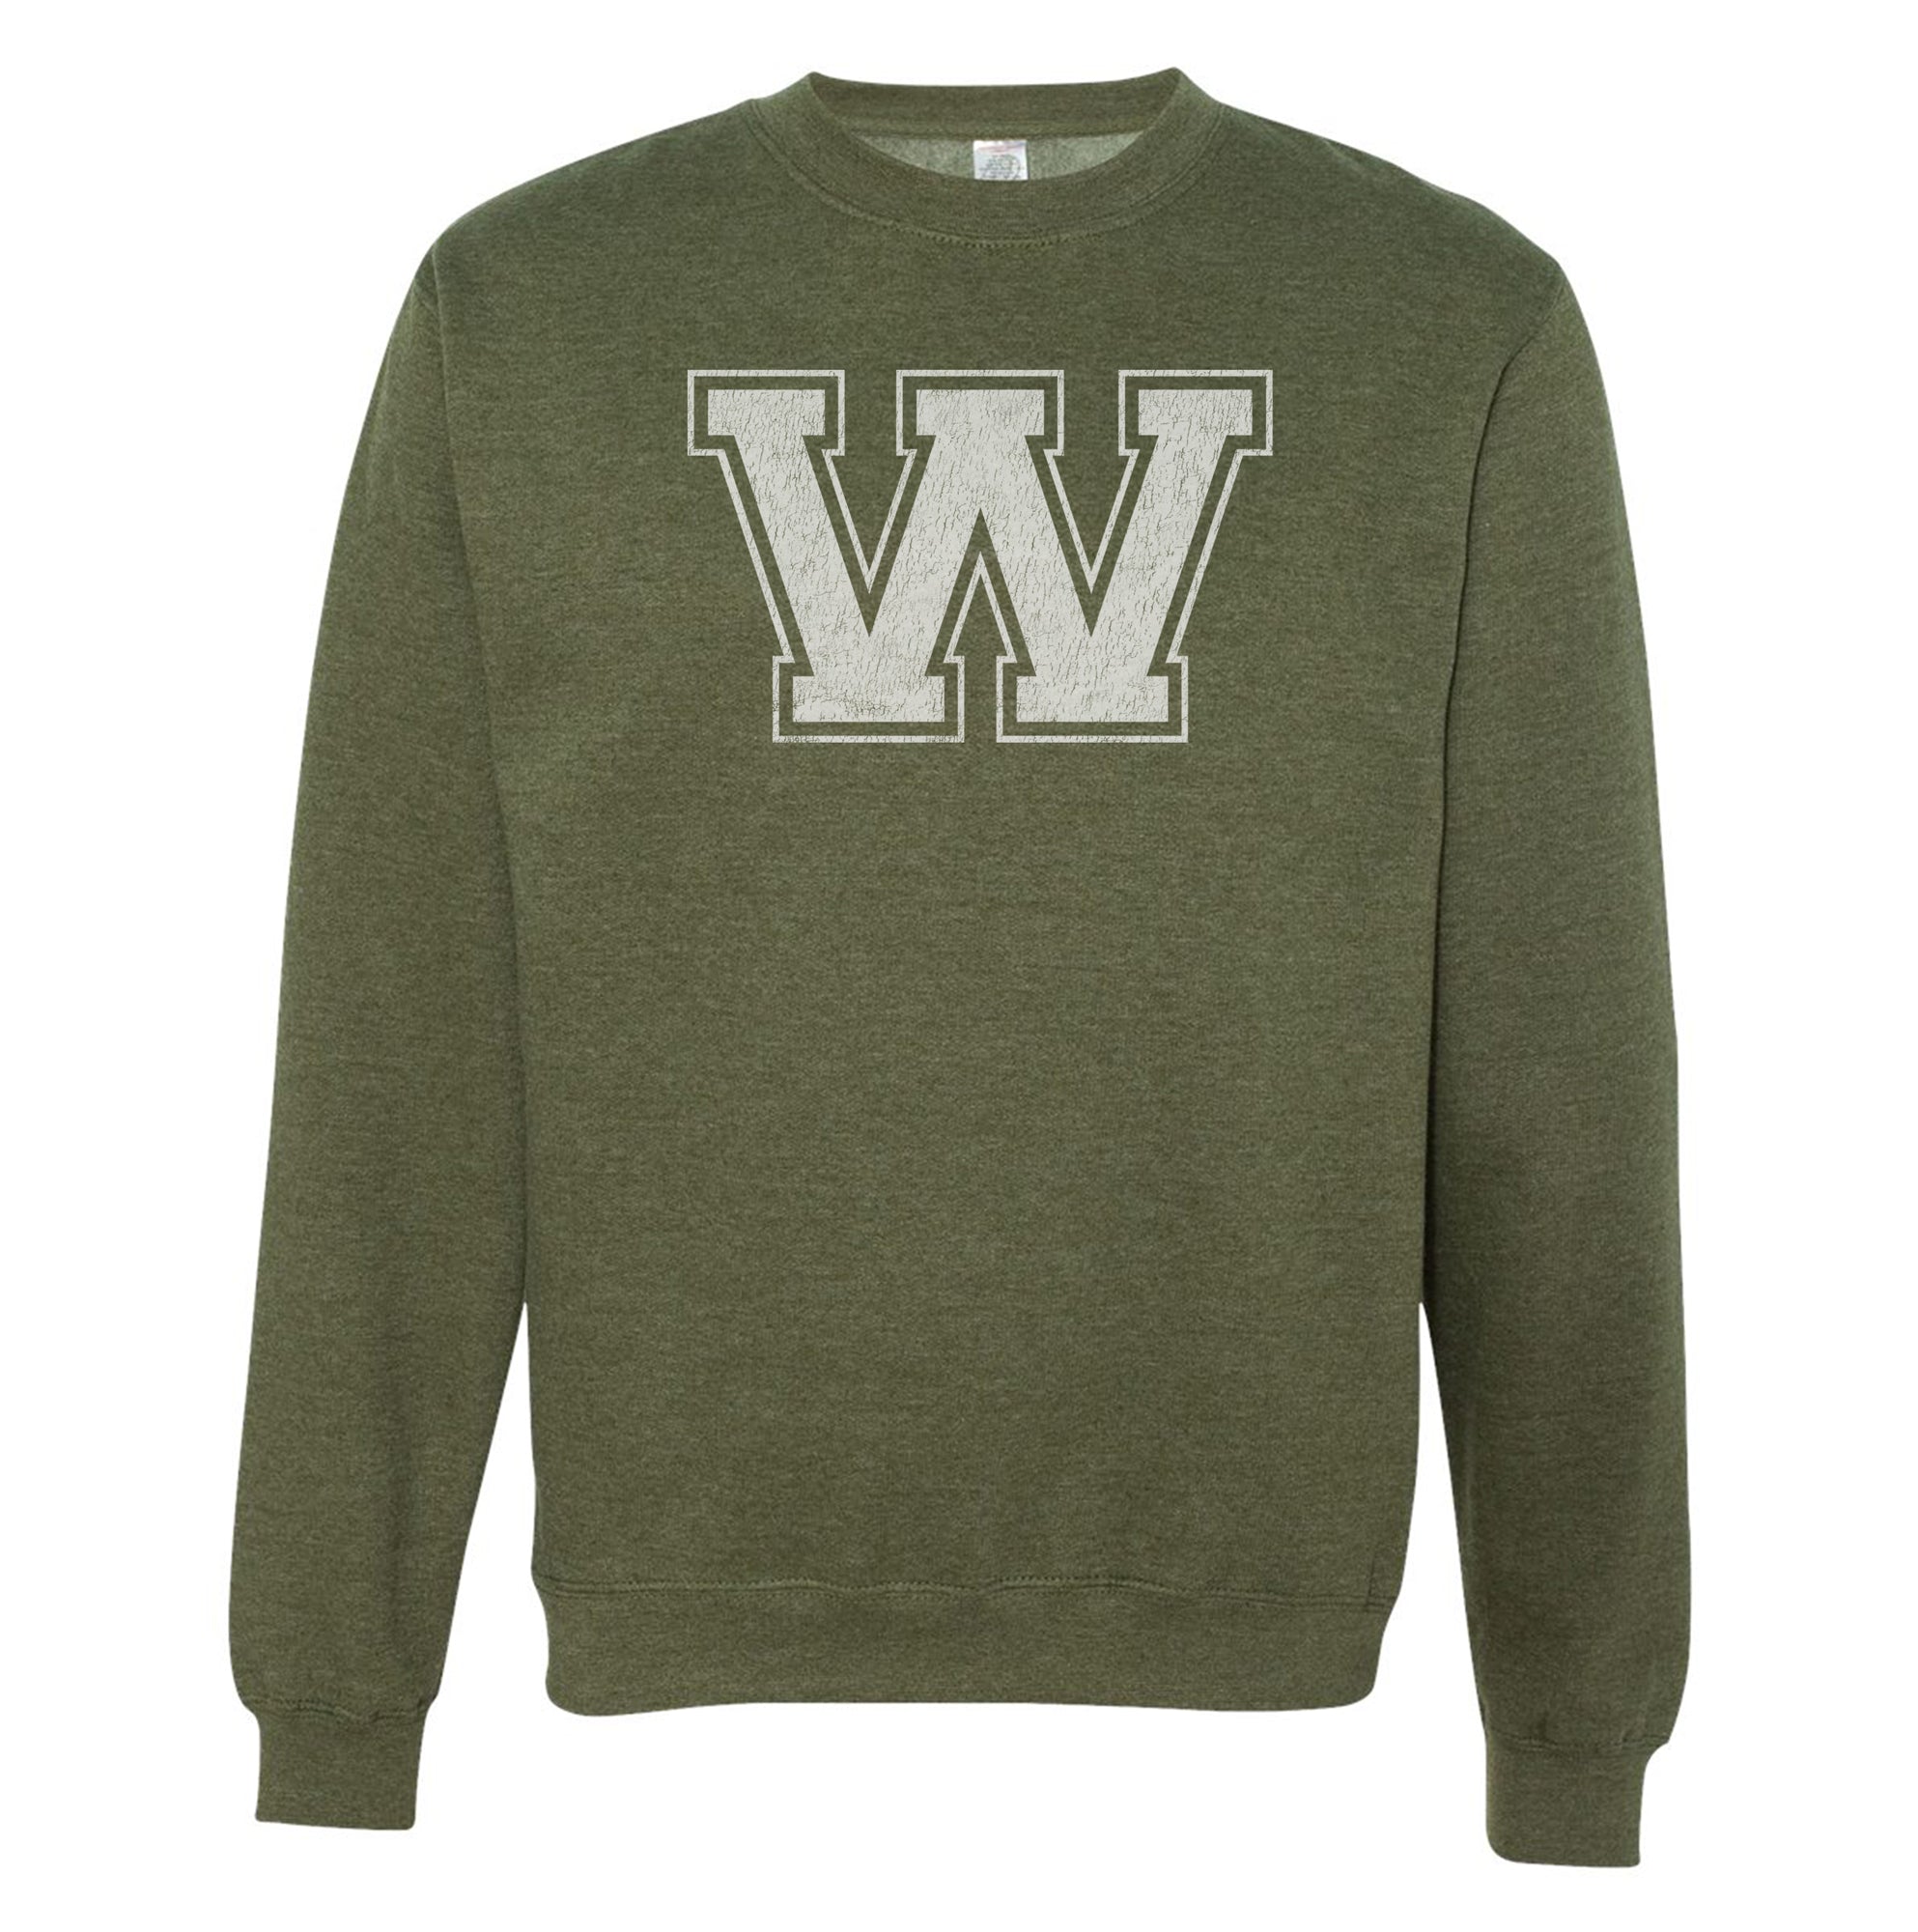 "W" - Vintage - Adult Comfy Sweatshirt